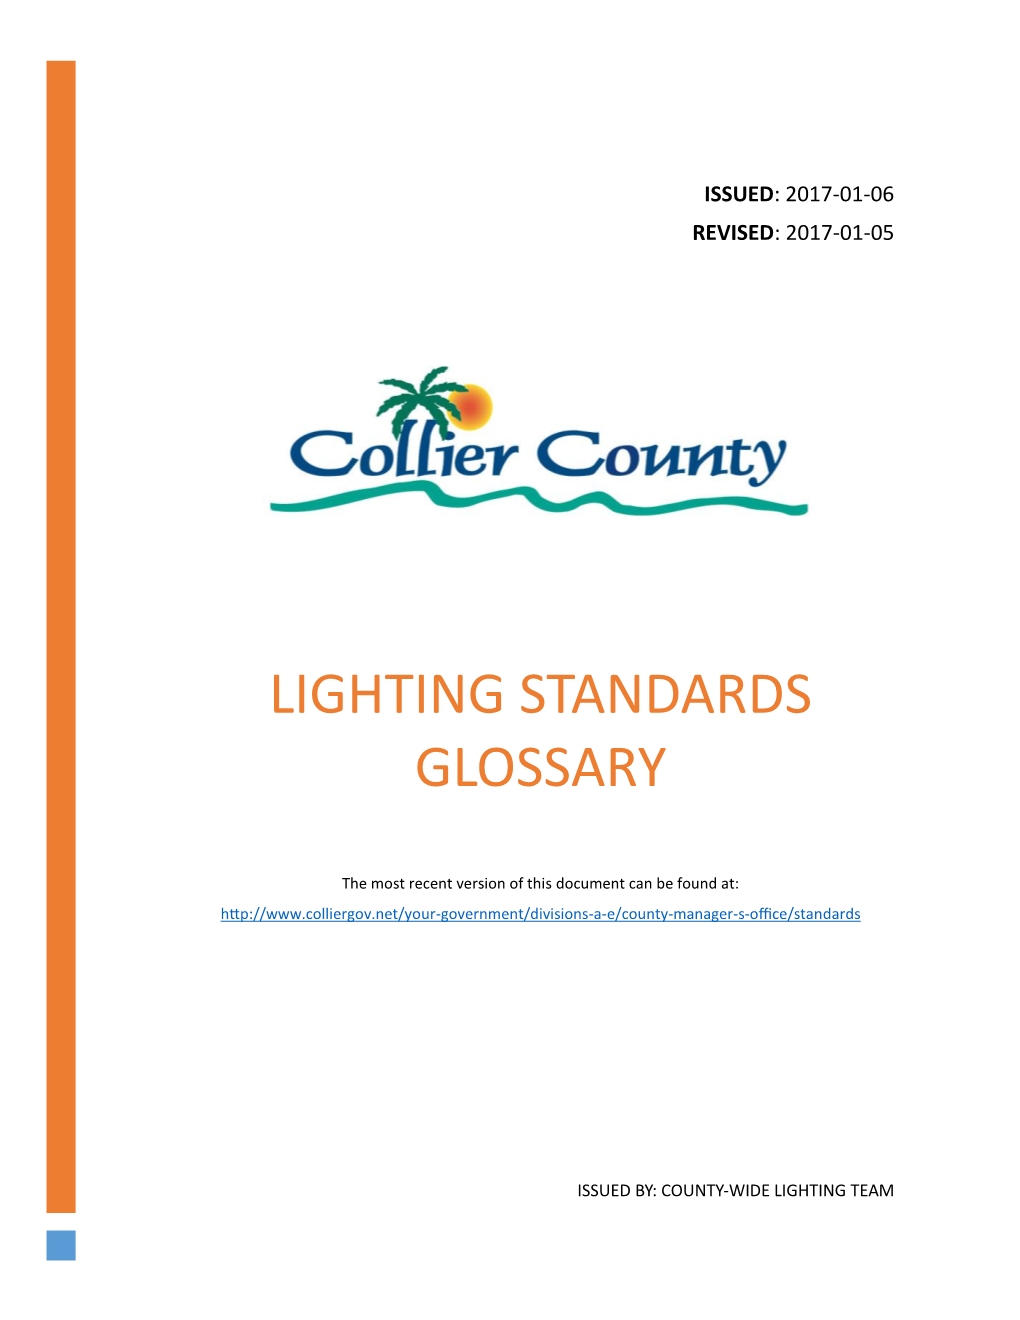 Lighting Standards Glossary